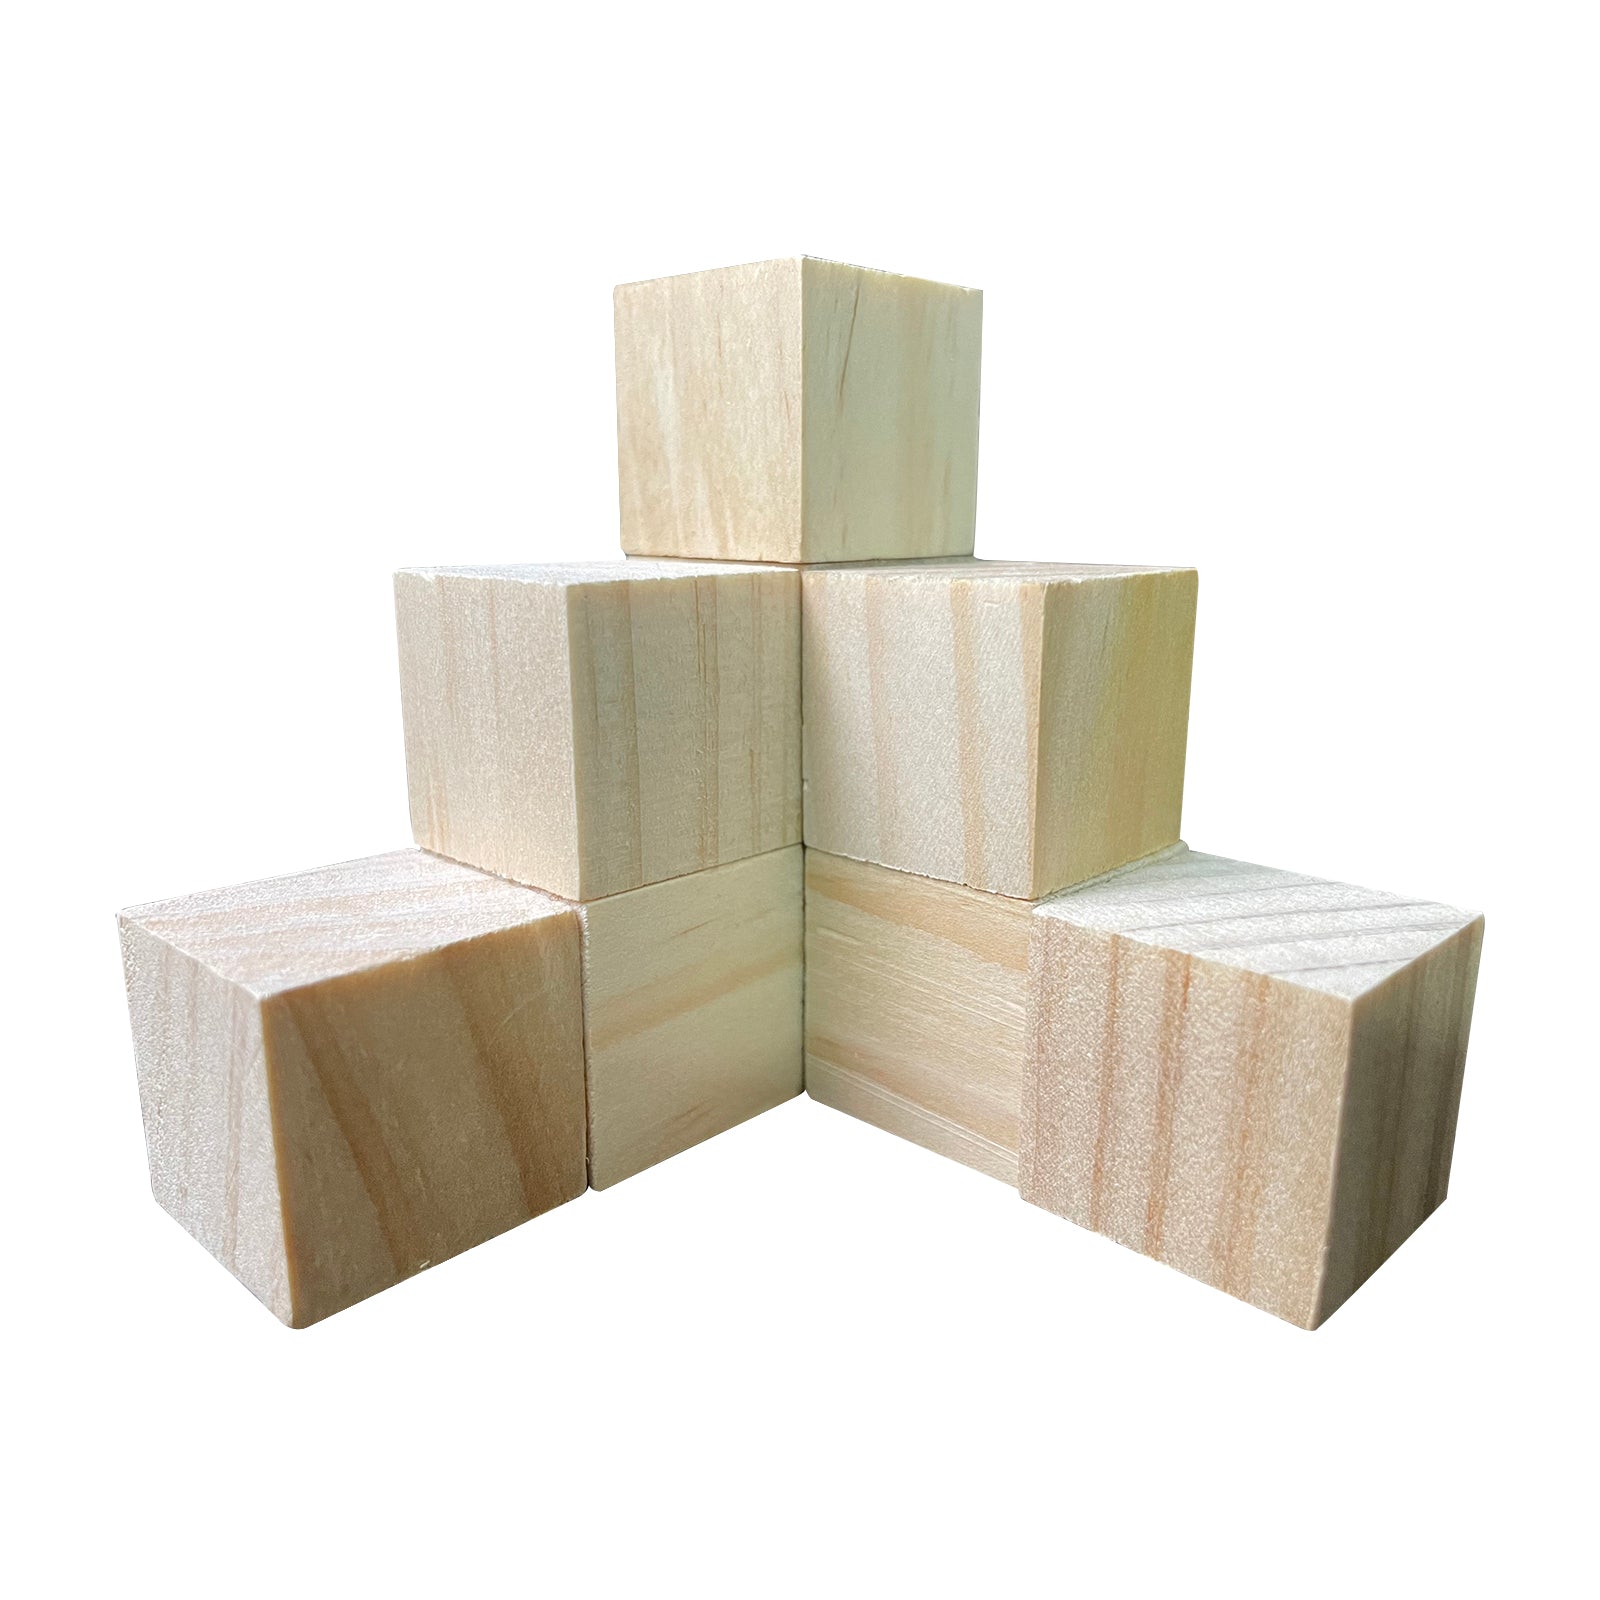 Wooden blocks 2 inch wood cubes